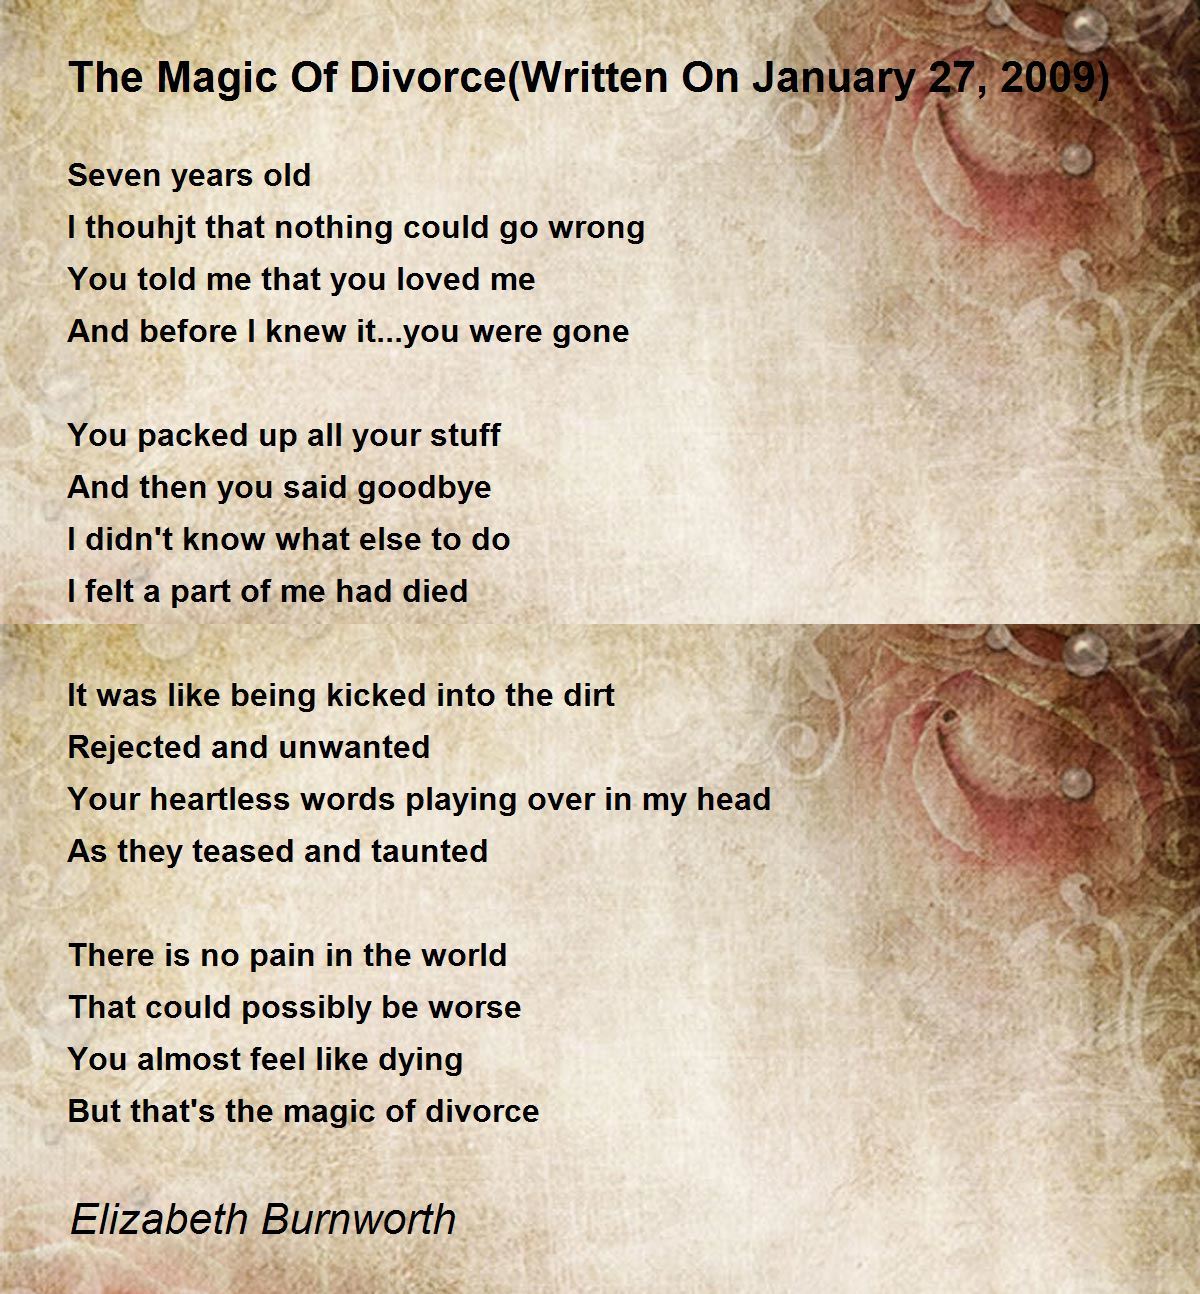 Blind Dating And Divorce - Blind Dating And Divorce Poem by me